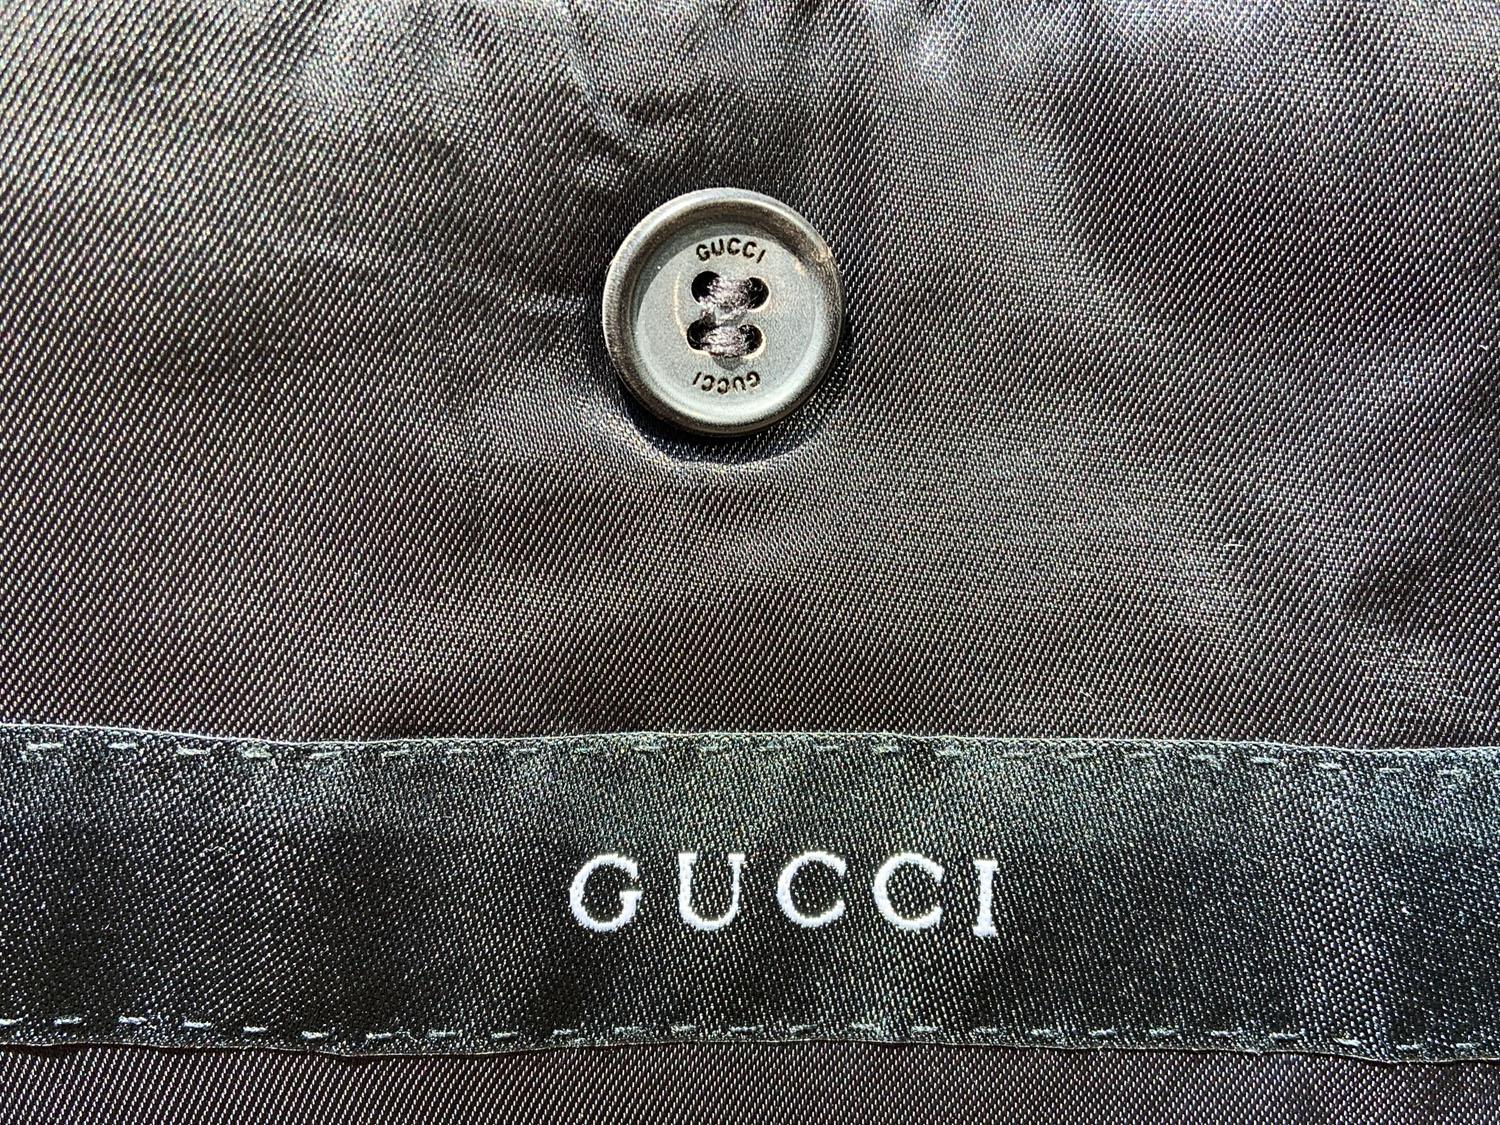 Tom Ford for Gucci SS 2000 Gothic Damask Iridescent Paint Velvet Blazer 48 US 38 For Sale 9